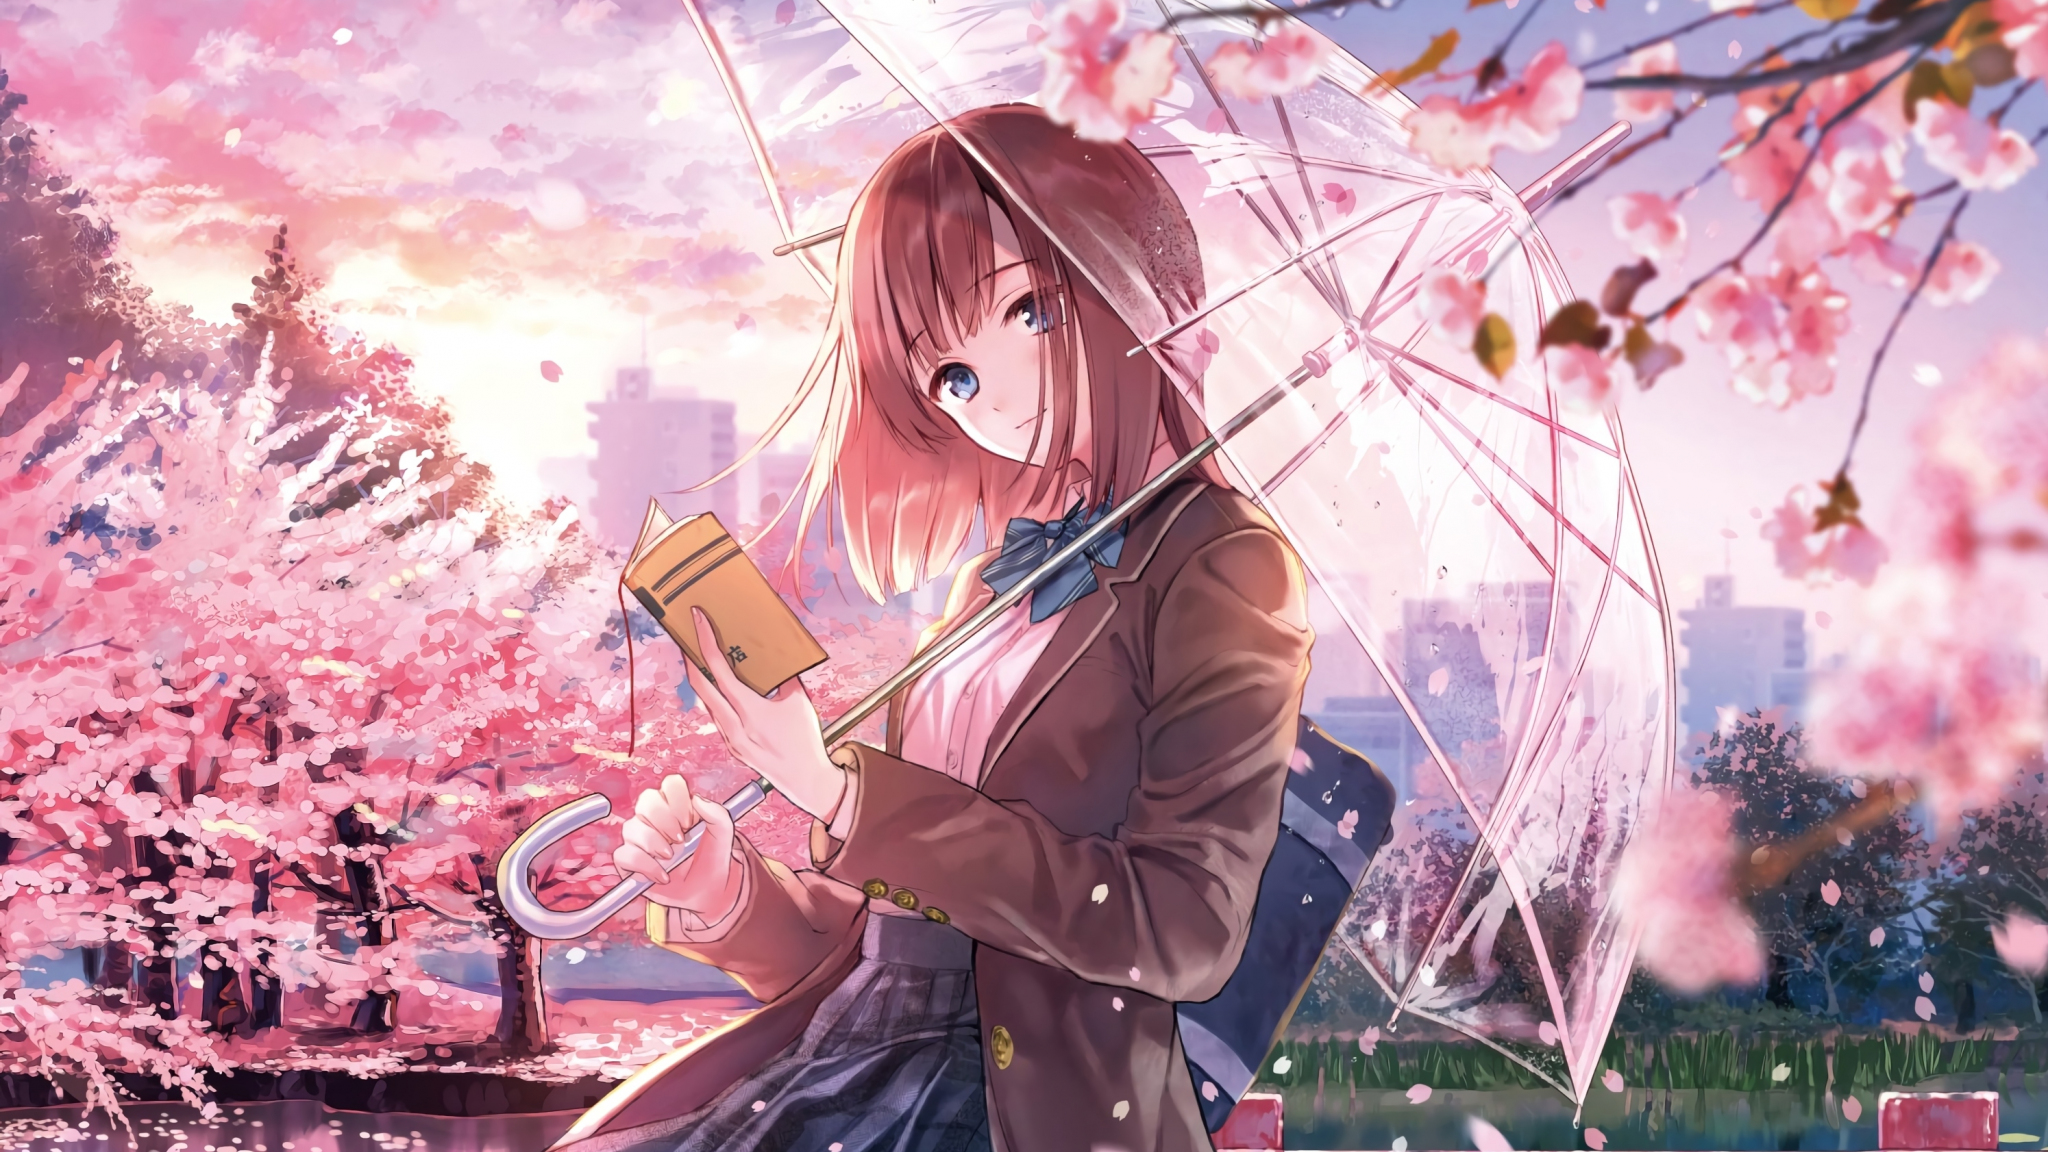 Download wallpaper 2048x1152 cute anime girl beautiful eating cake dual  wide 2048x1152 hd background 23915